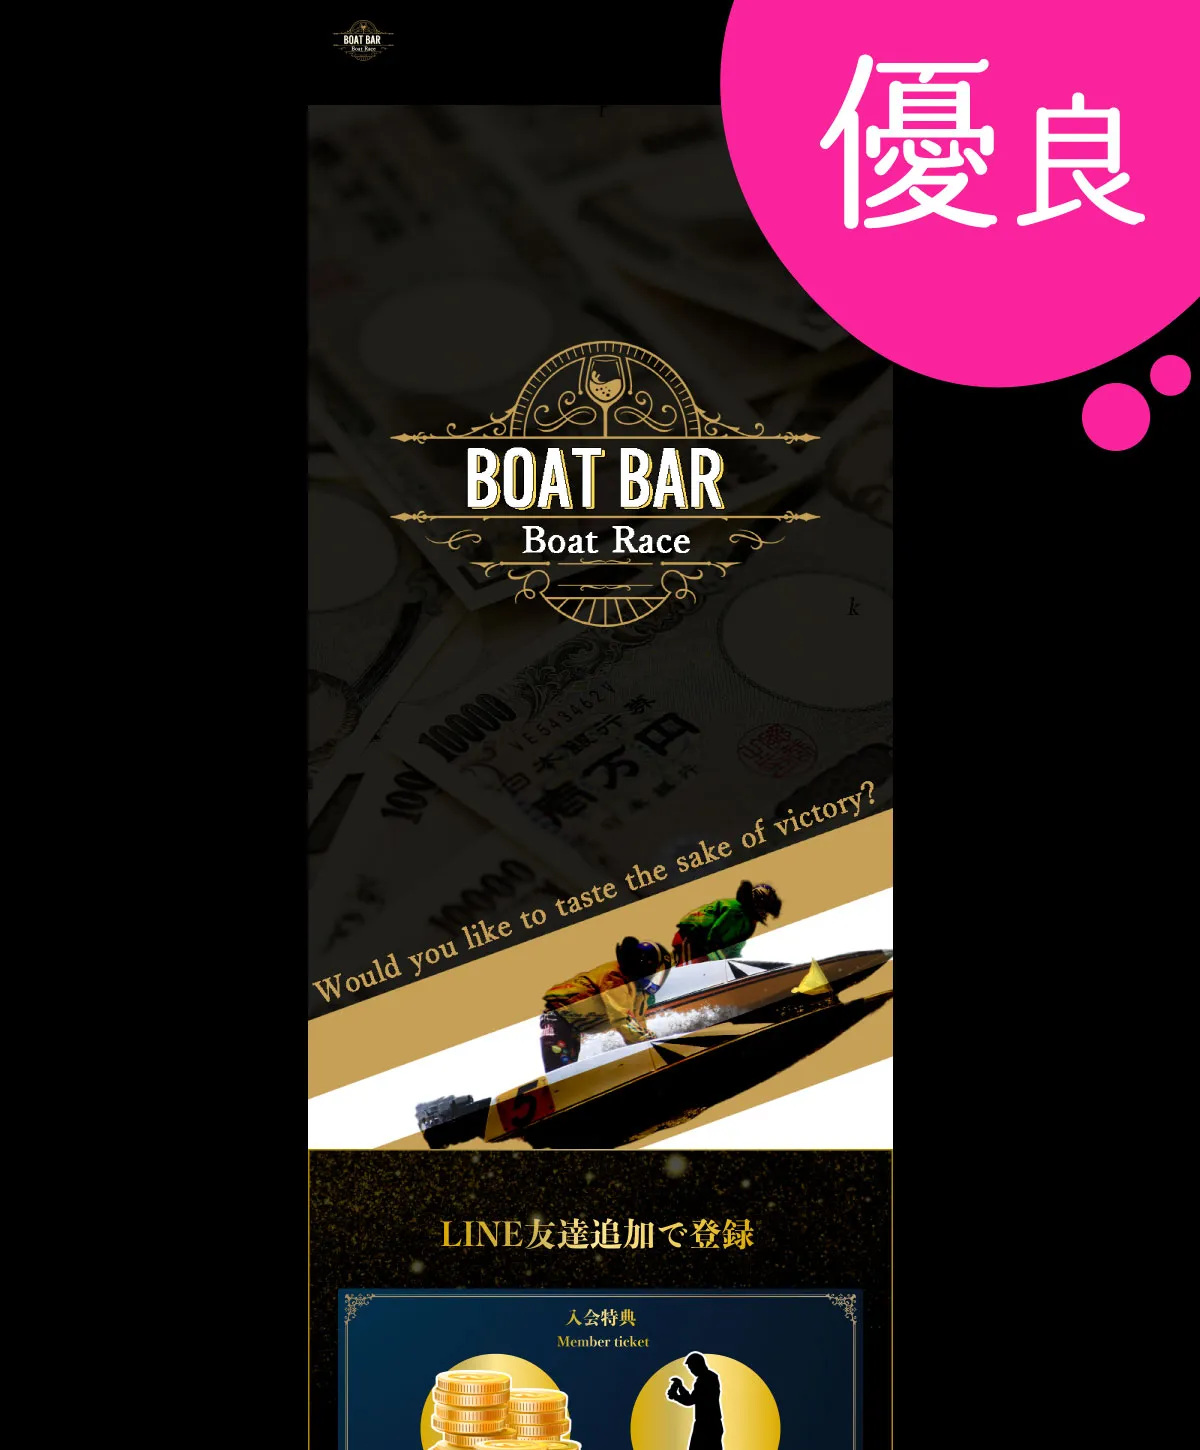 BOAT-BAR(ボートバー) 優良競艇予想サイトの口コミ検証や無料情報の予想結果も公開中